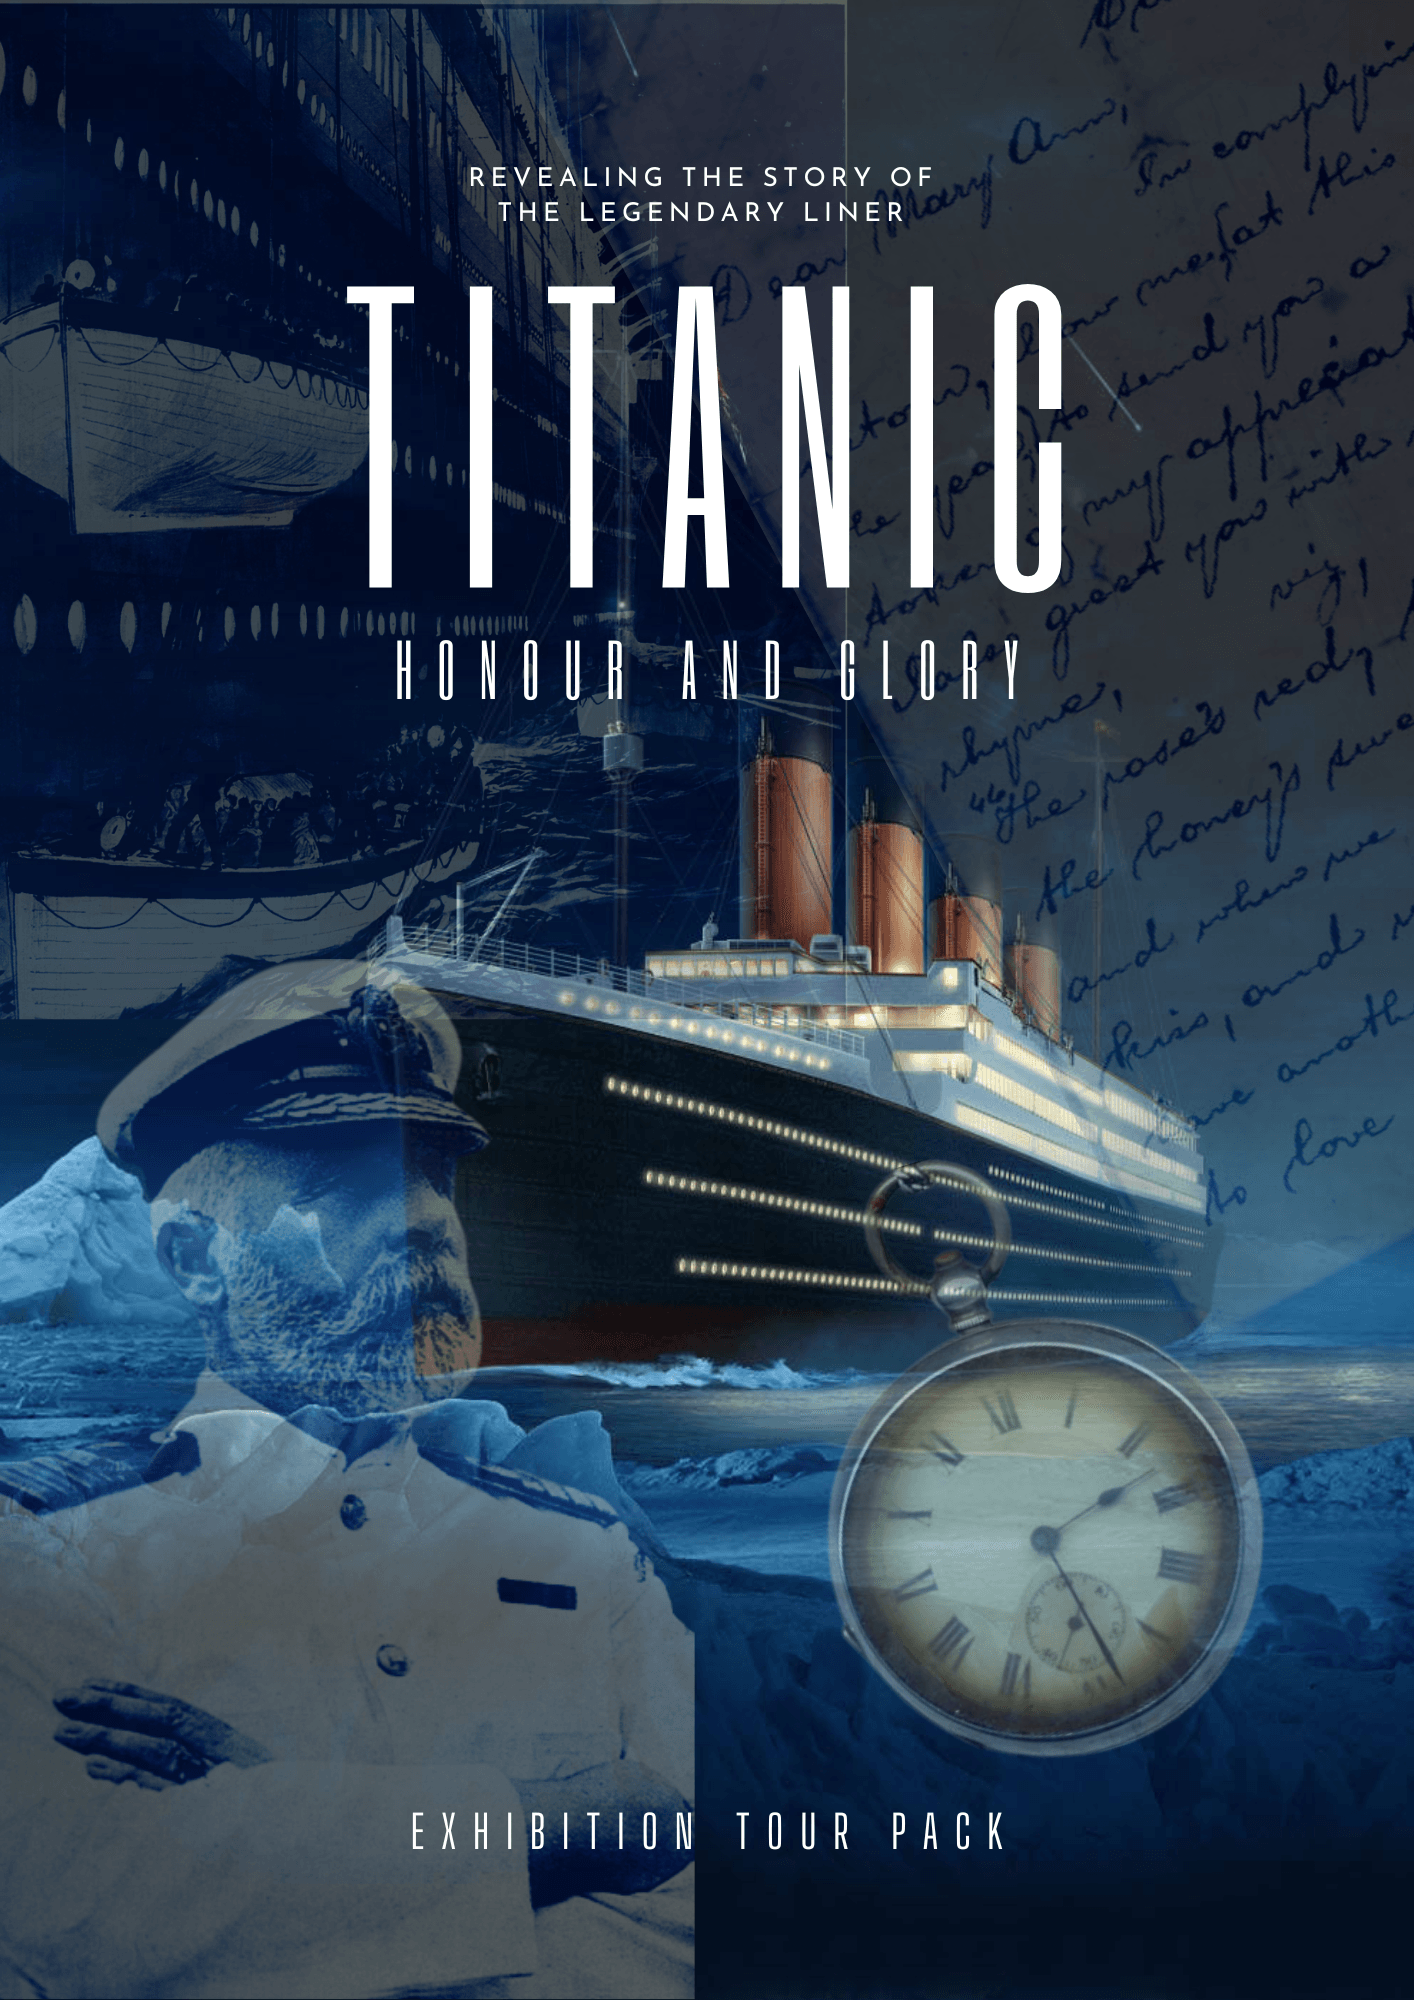 titanic, titanic exhibition, titanic artefact displays, titanic in photographs, white star line, captain smith, titanic artefacts, rms olympic, titanic honour and glory exhibitions, titanic honour and glory